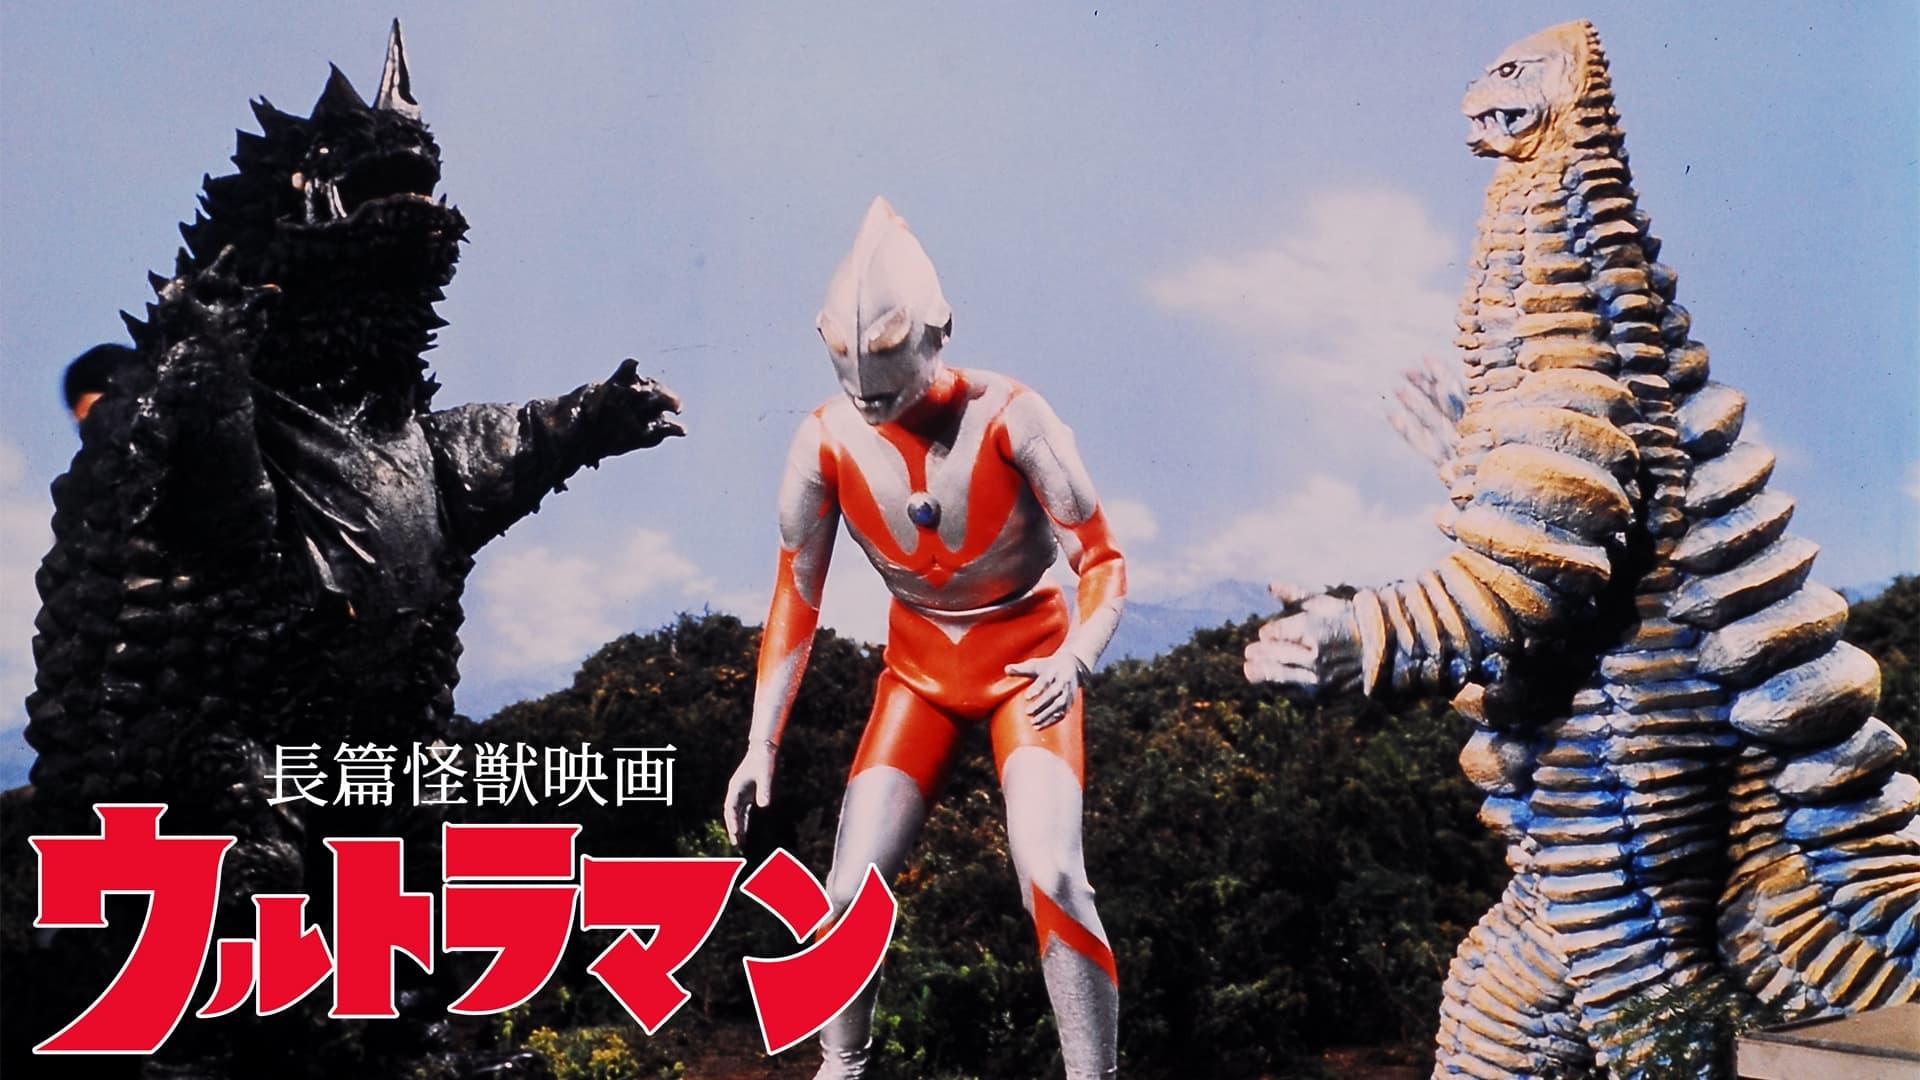 Ultraman: Monster Movie Feature backdrop